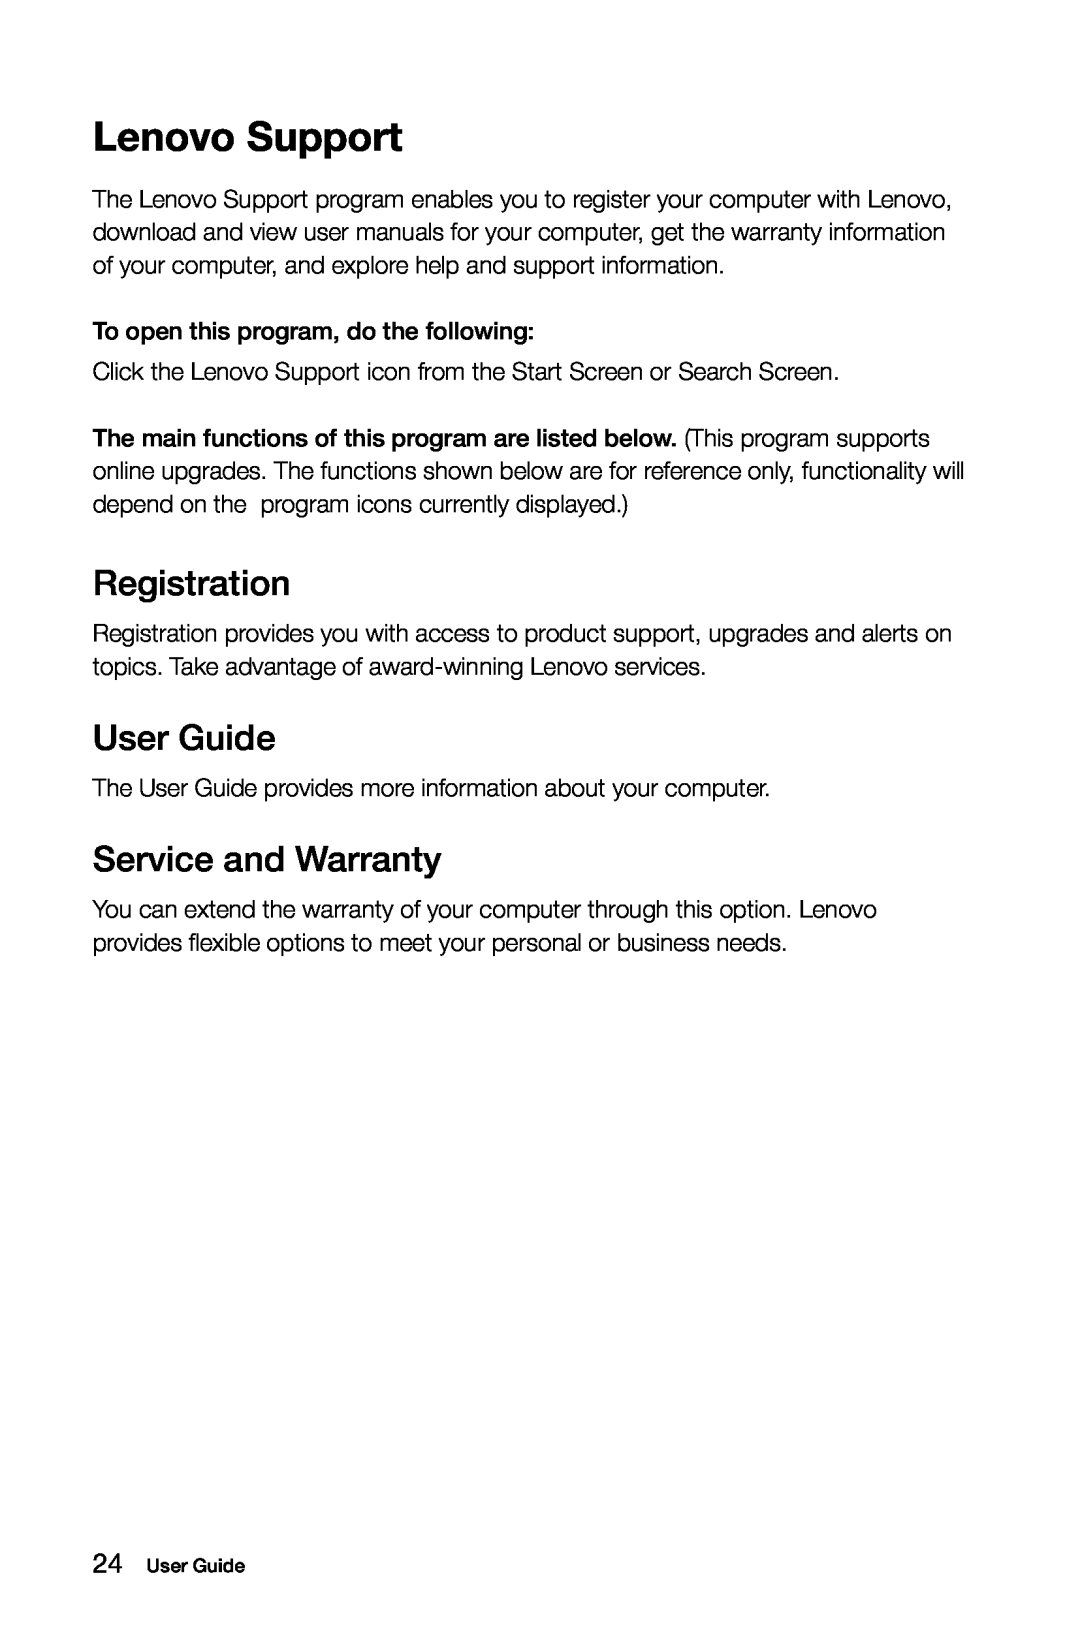 Lenovo 57321302 manual Lenovo Support, Registration, User Guide, Service and Warranty 